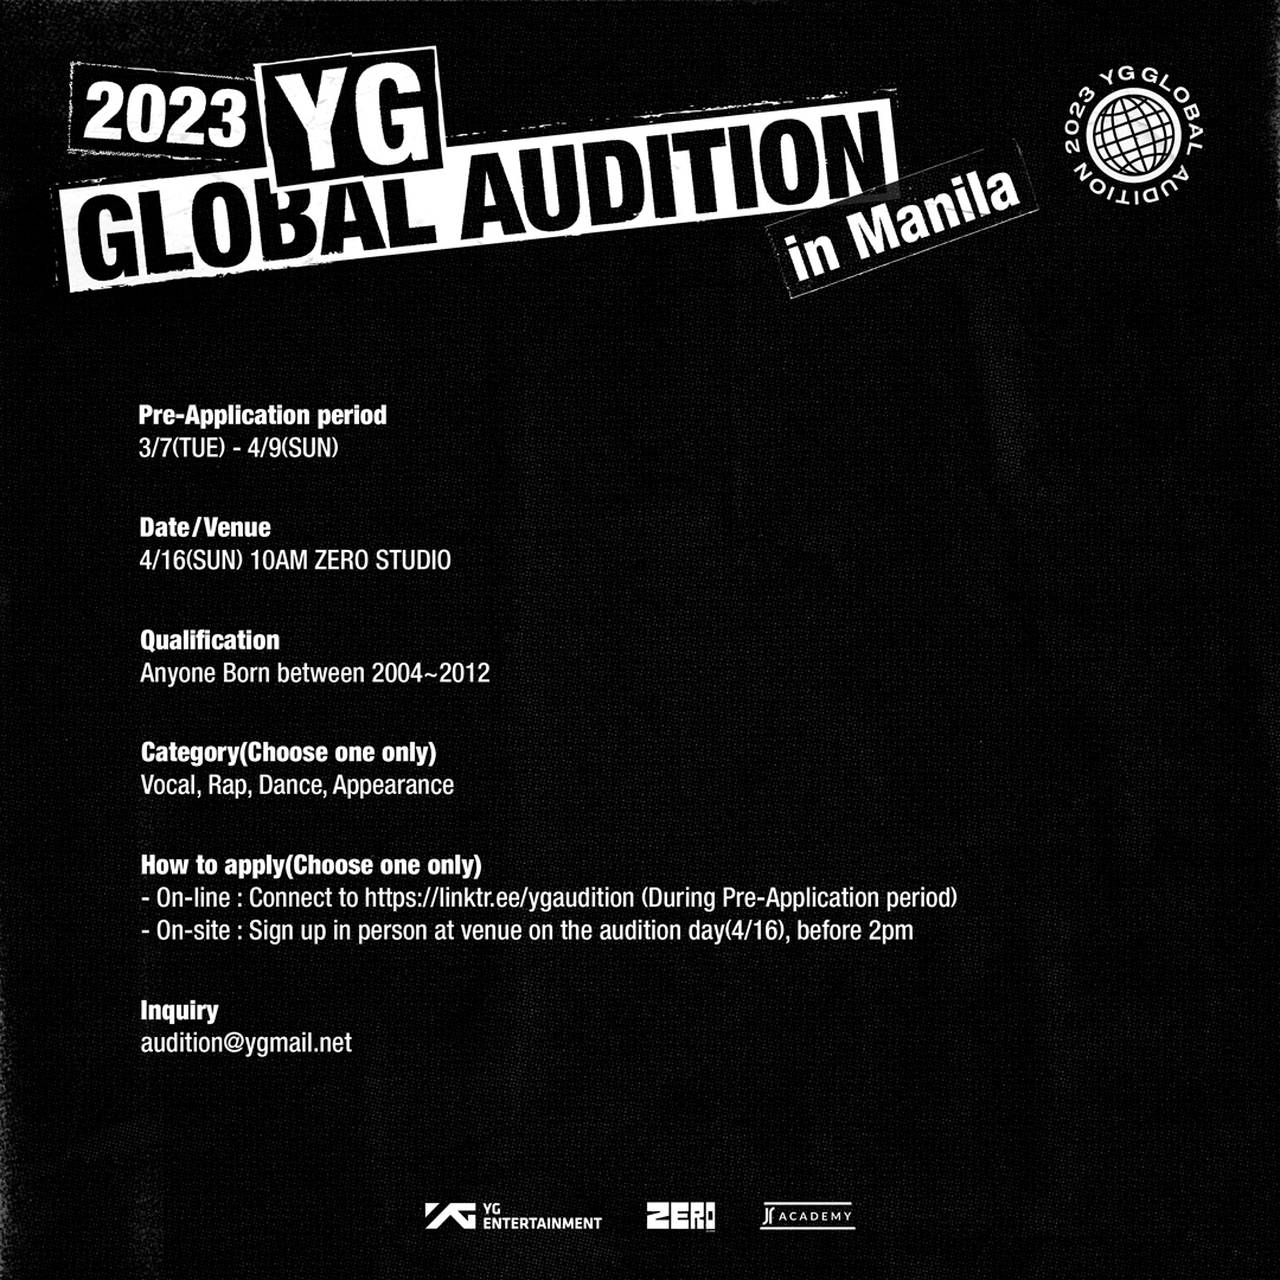 YG audition in Manila